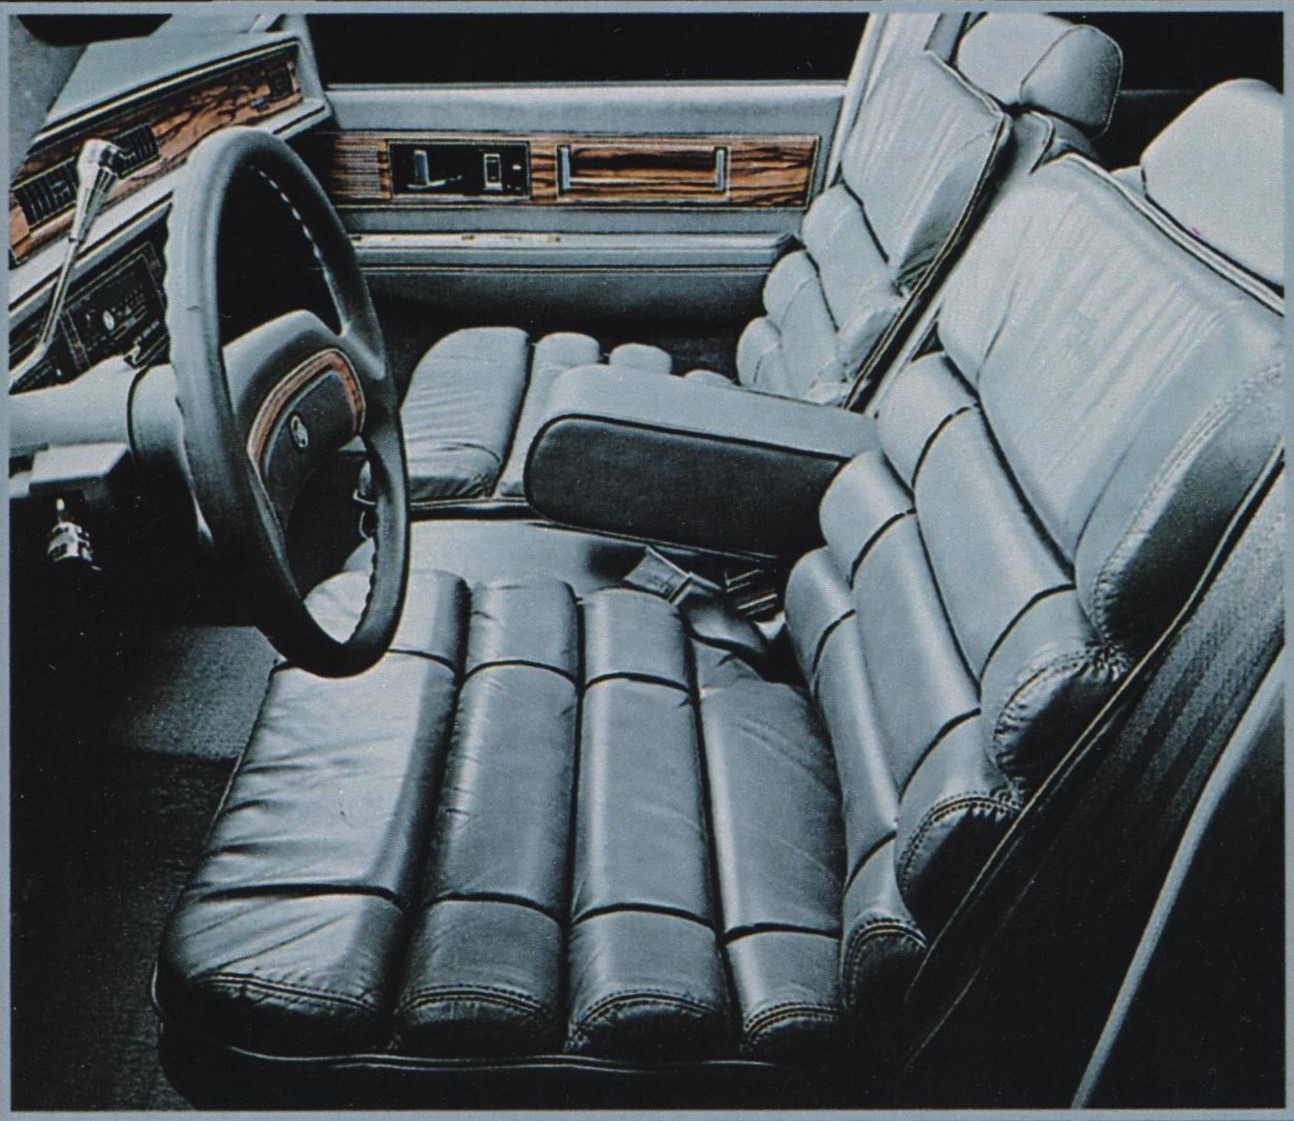 1988 Buick Electra Interior.jpg